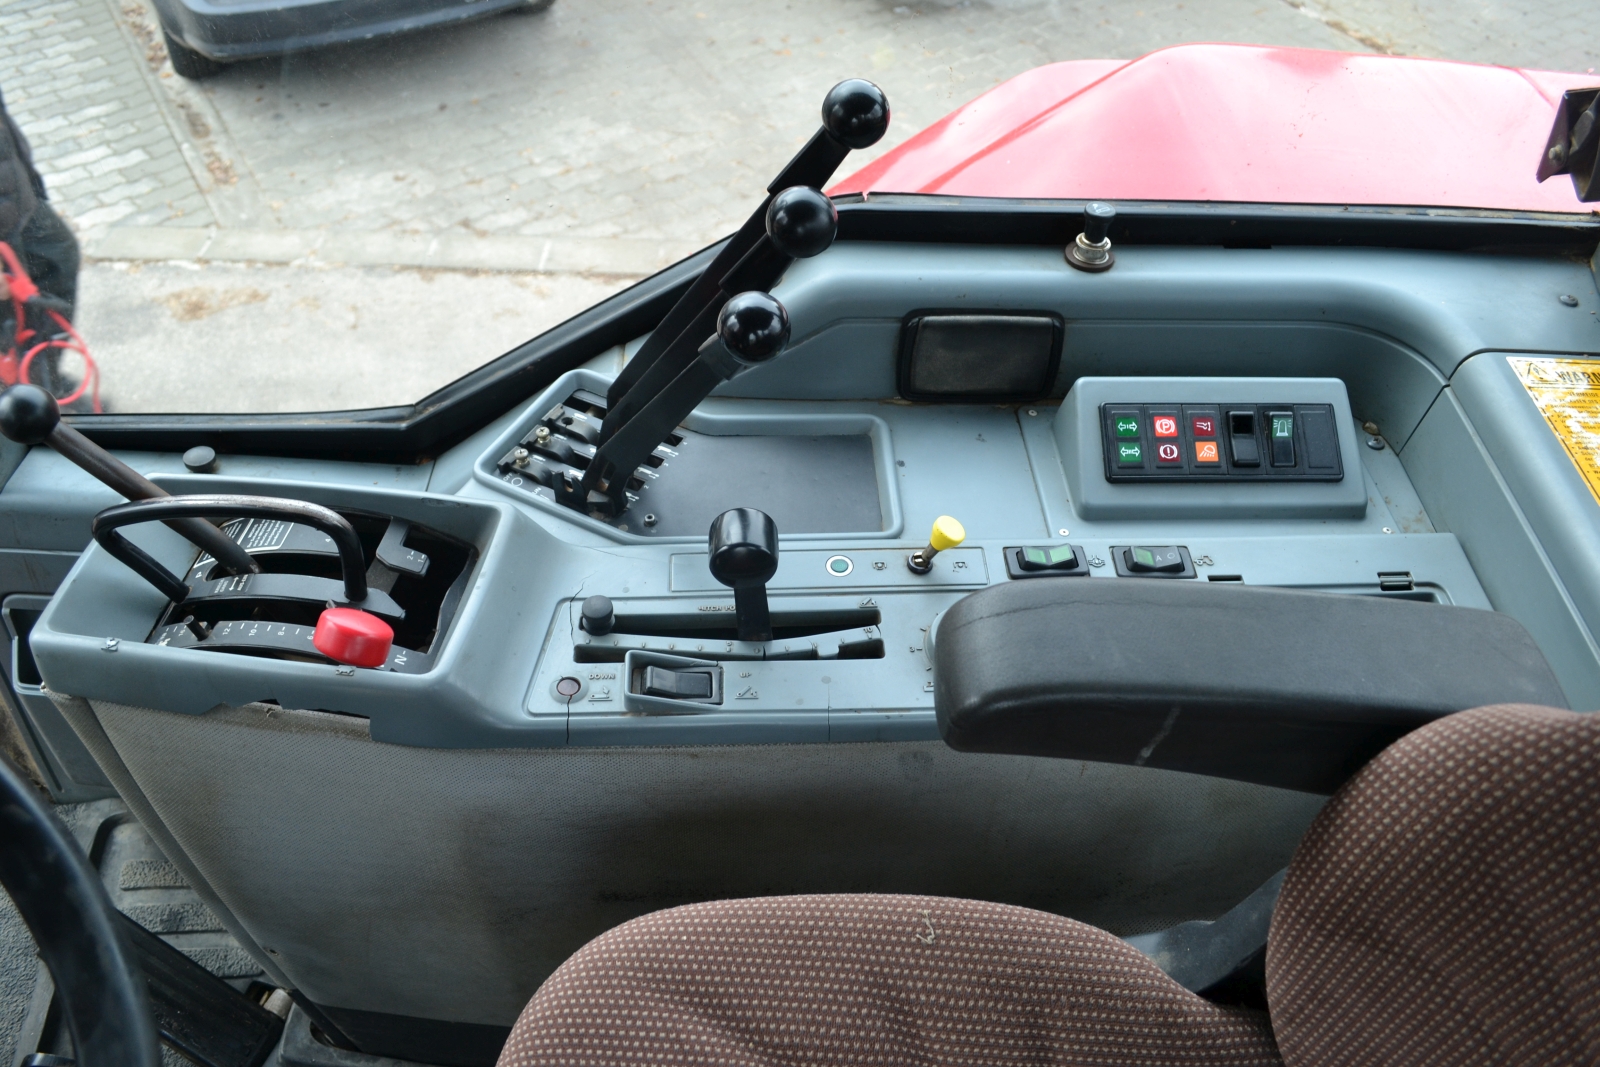 Steyr 9220 traktor